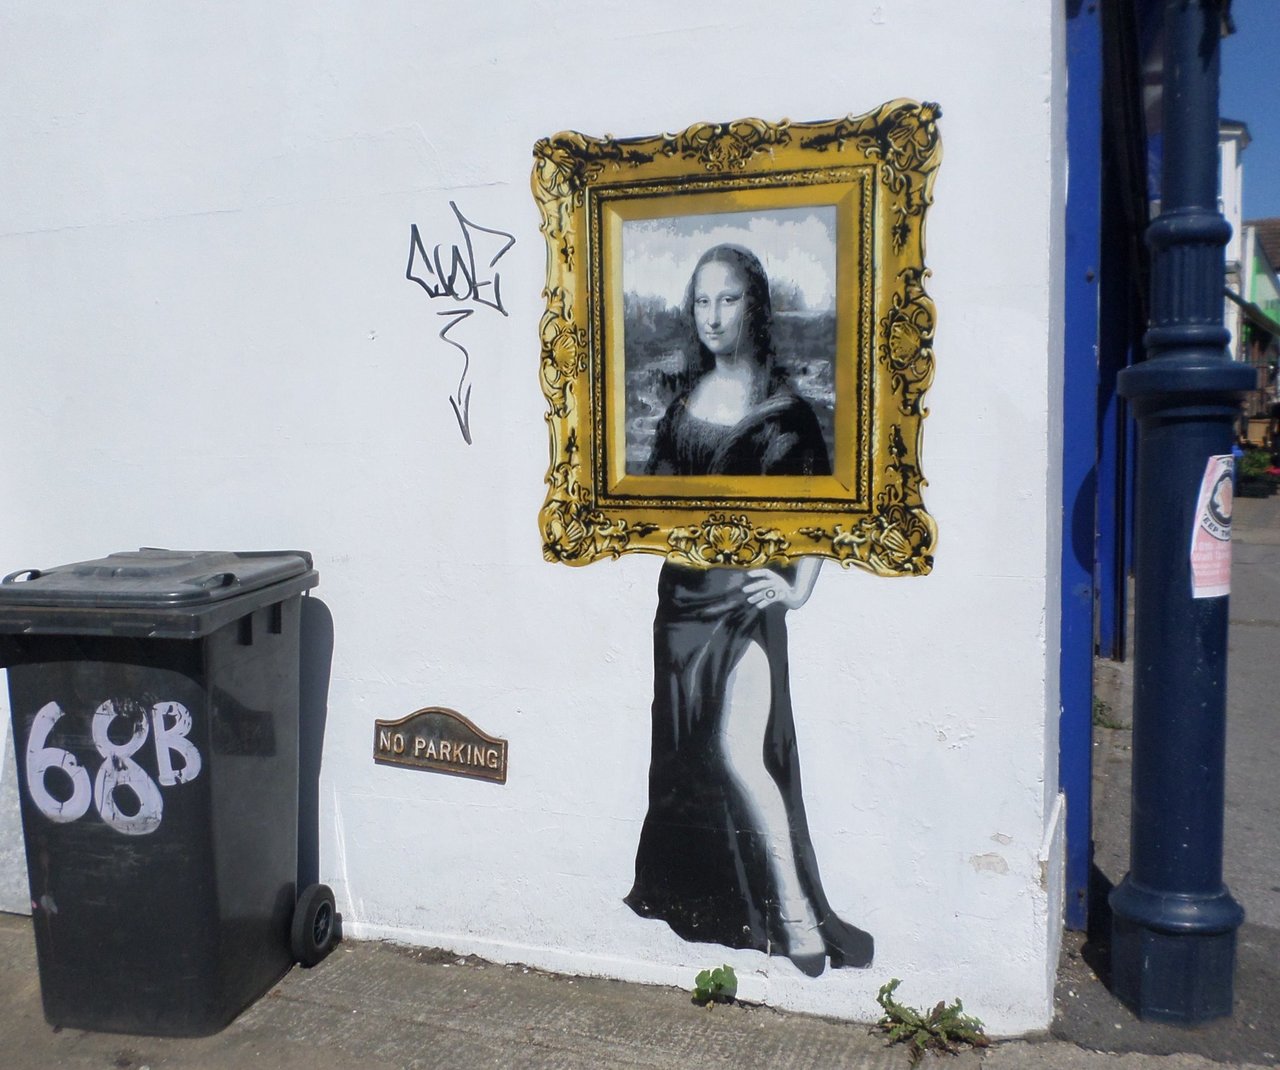 #Streetart #urbanart #stencil #graffiti "Mona Lisa" by #artist Catman - Whitstable, Kent, UK https://t.co/xtADlLI1z8